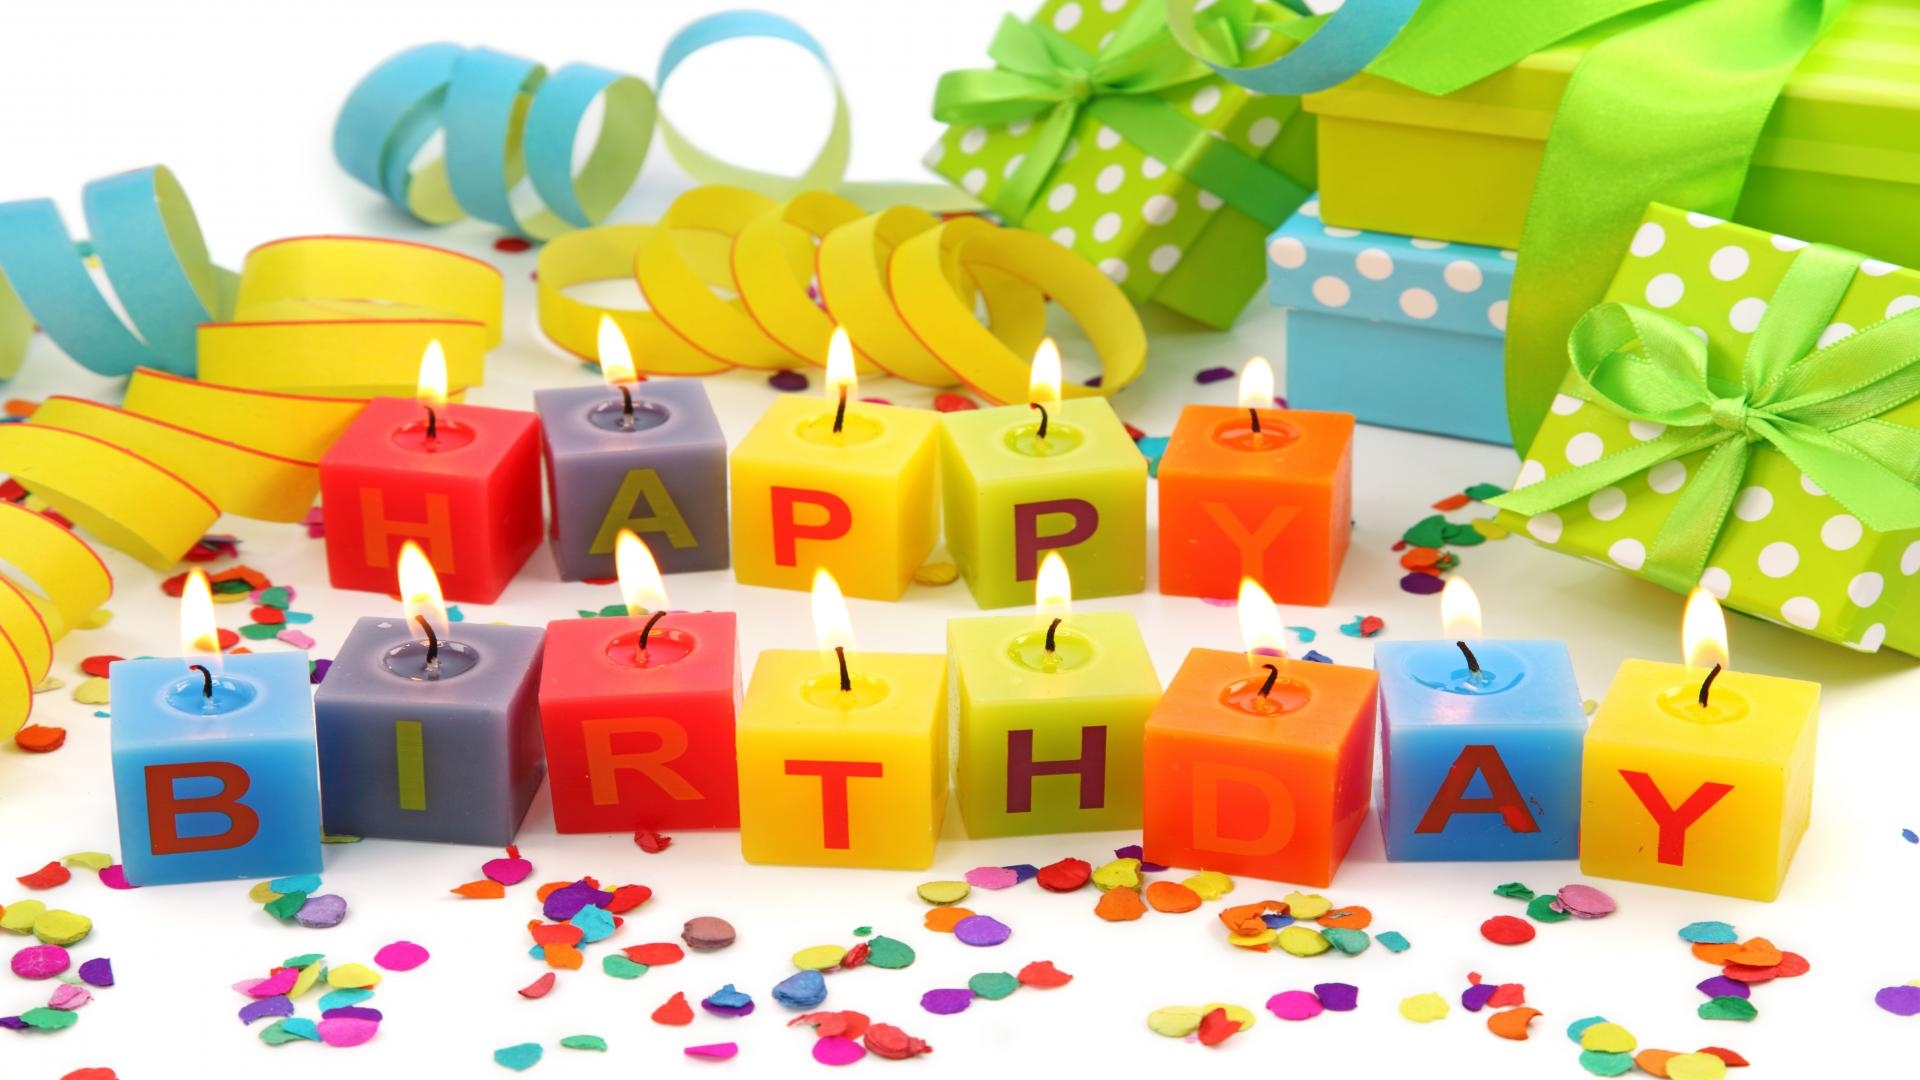 Happy Birthday 3d Images - Free Download on Freepik